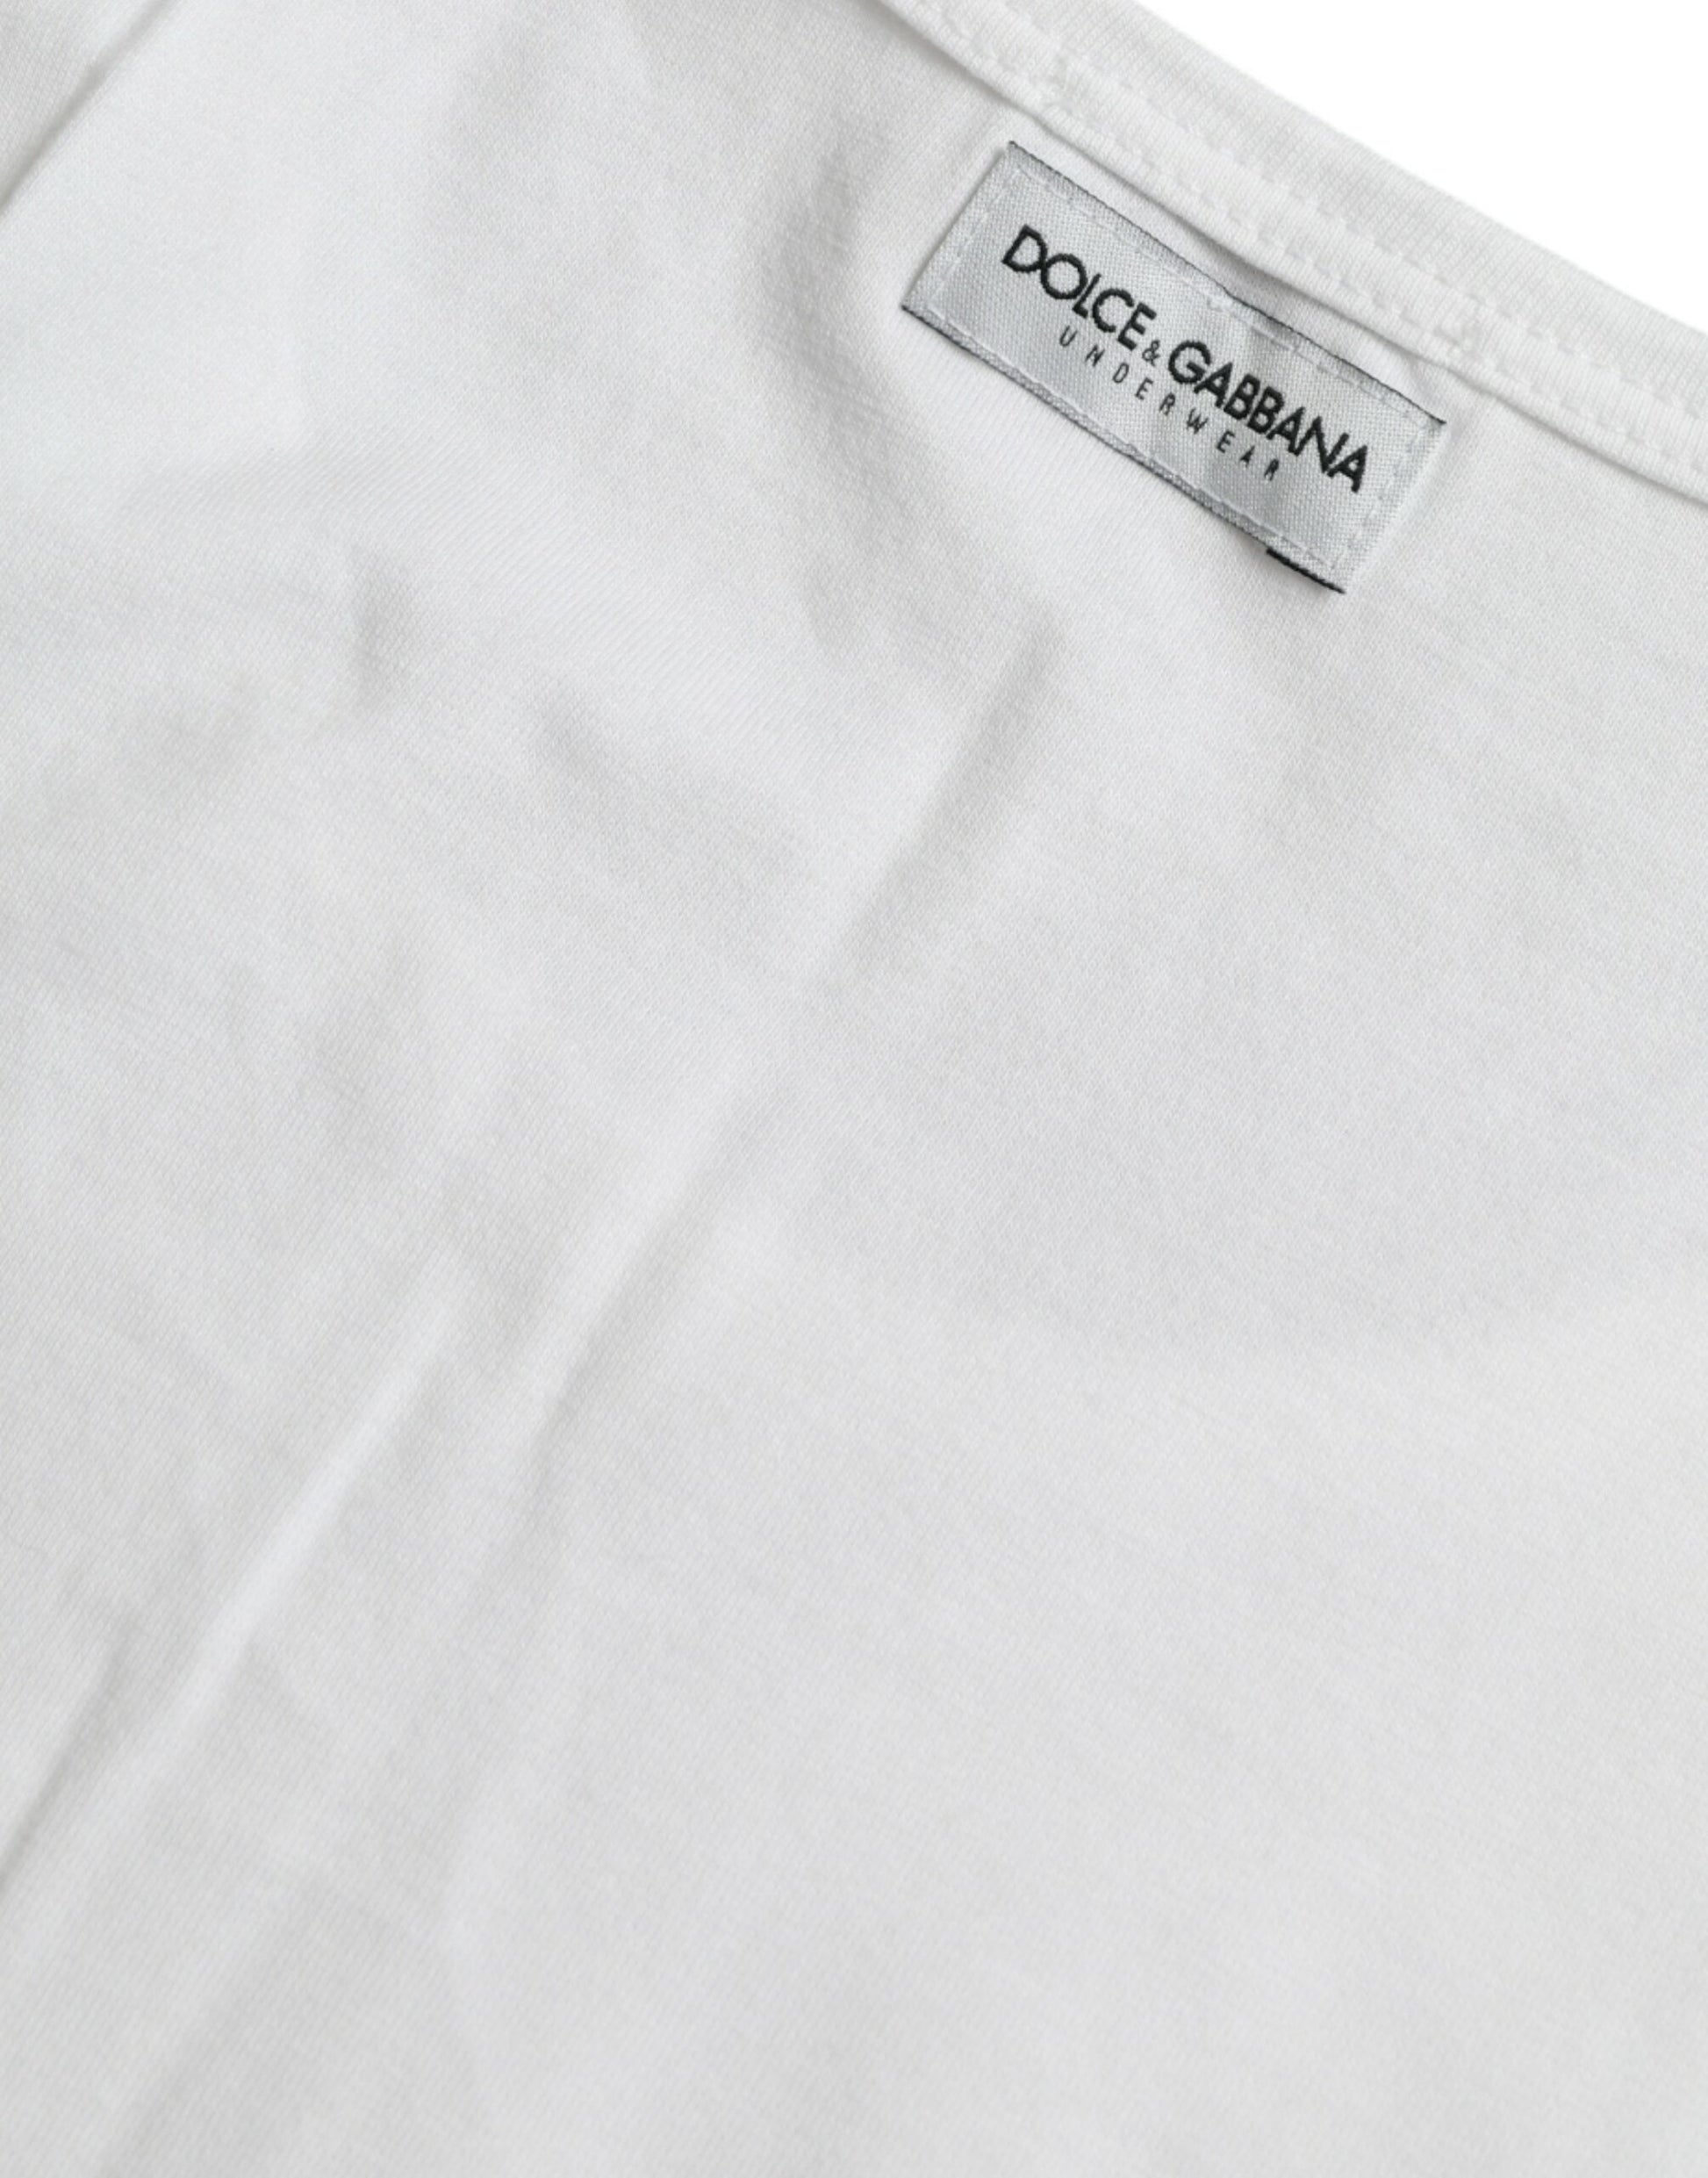 Fashionsarah.com Fashionsarah.com Dolce & Gabbana White Cotton Round Neck Crewneck Underwear T-shirt